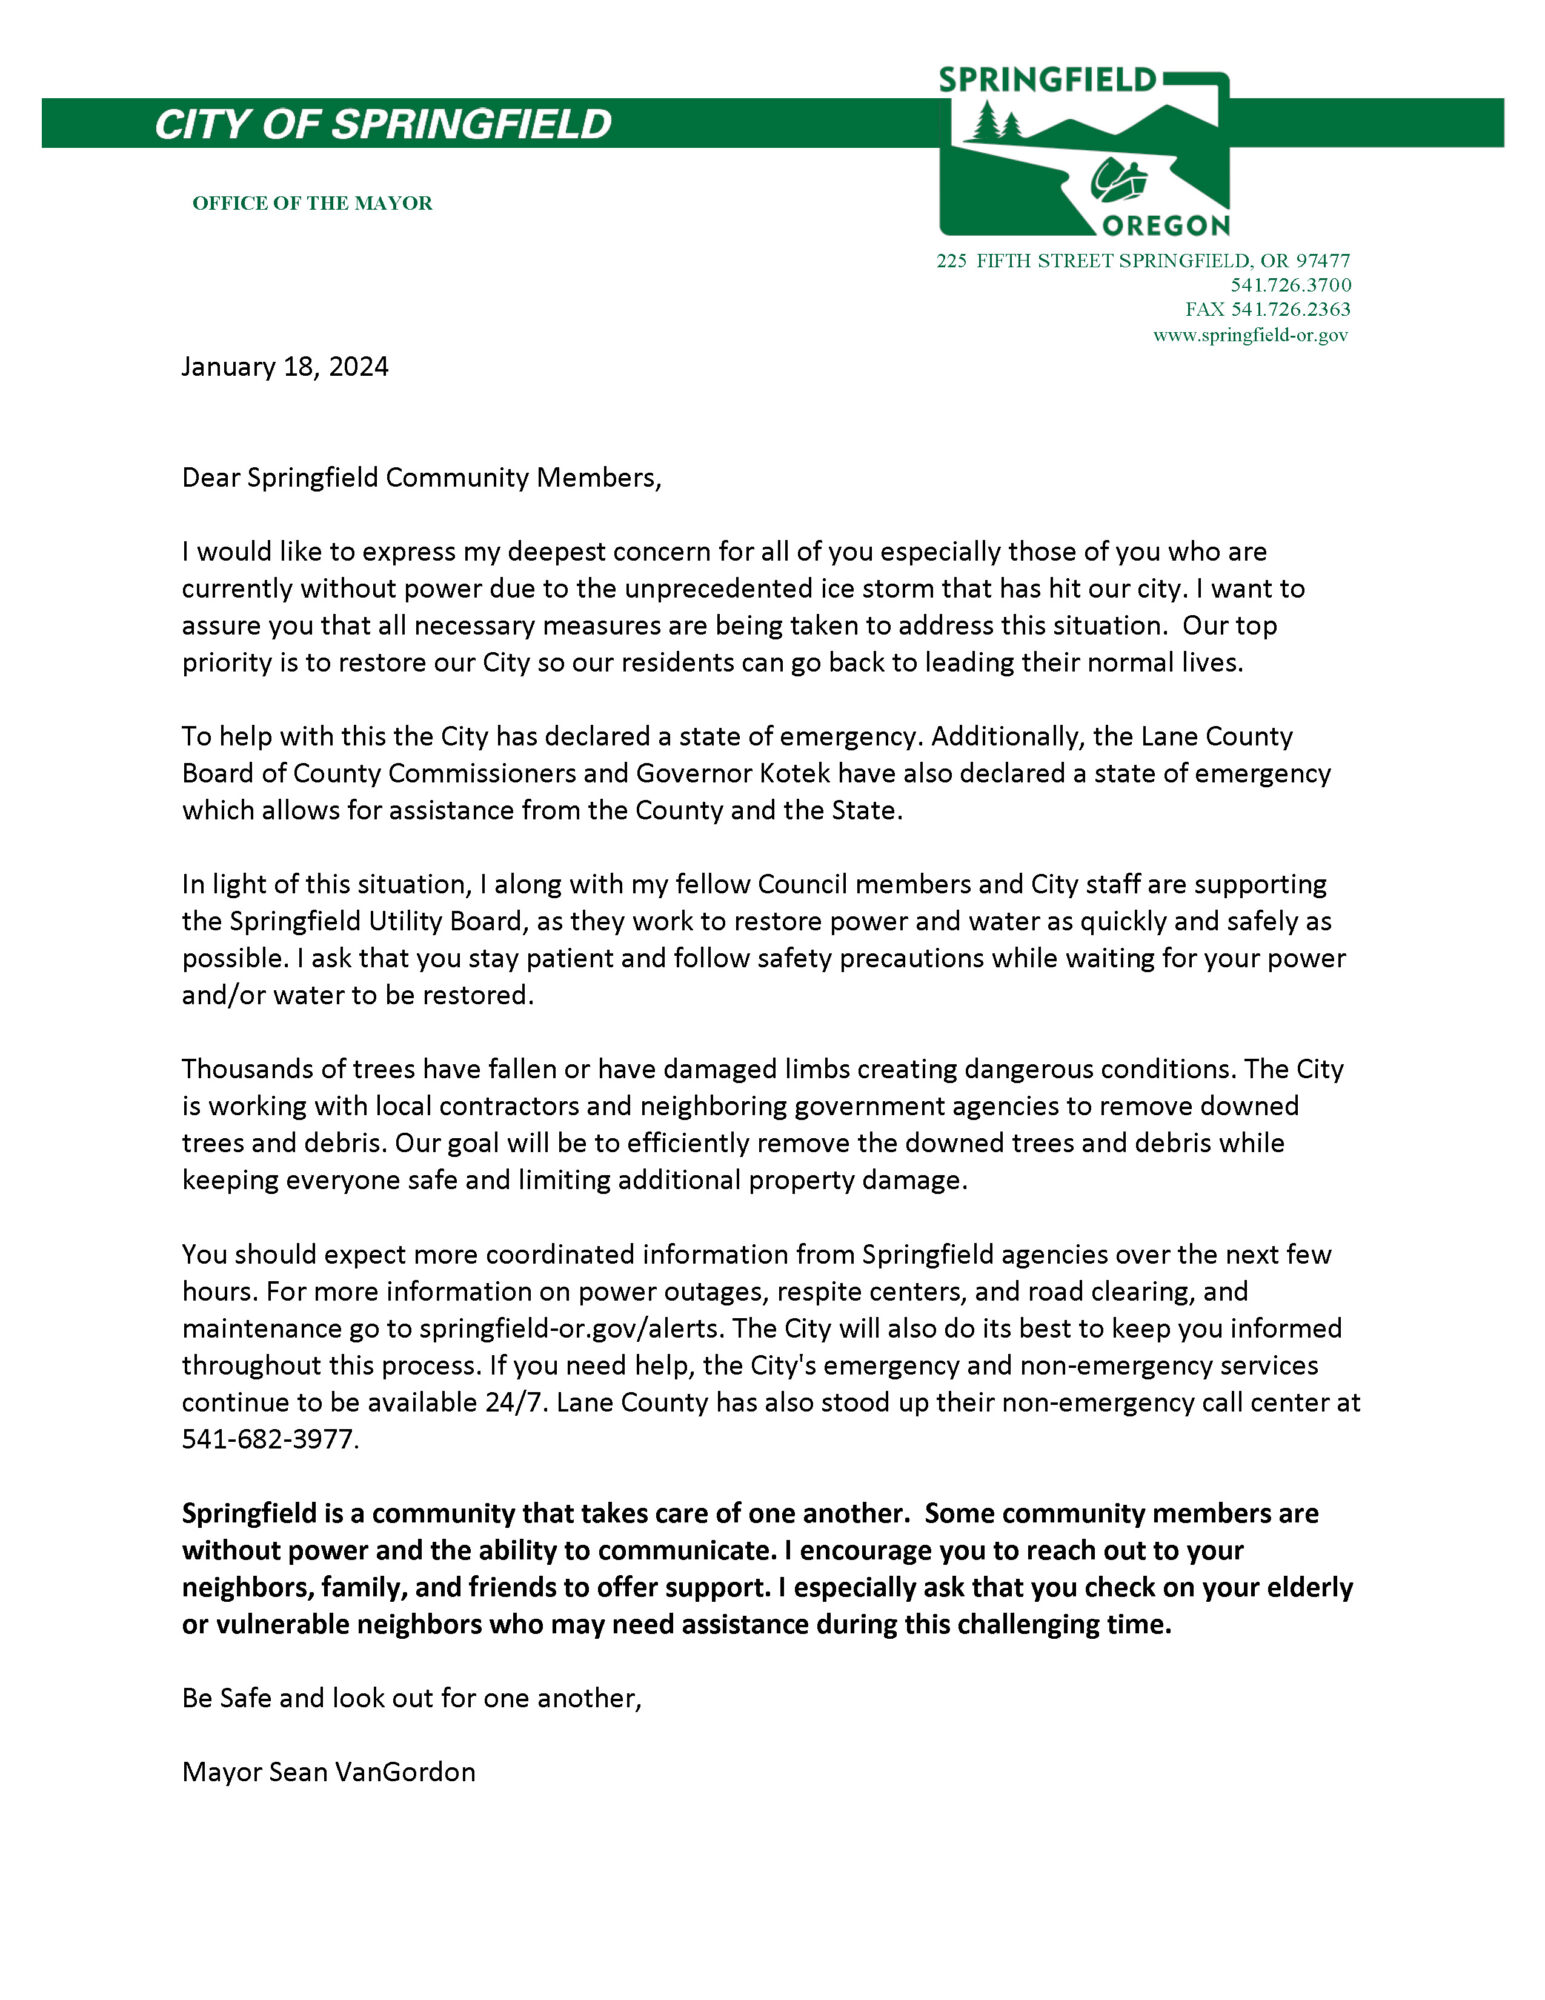 Letter to community from Springfield Mayor Sean VanGordon